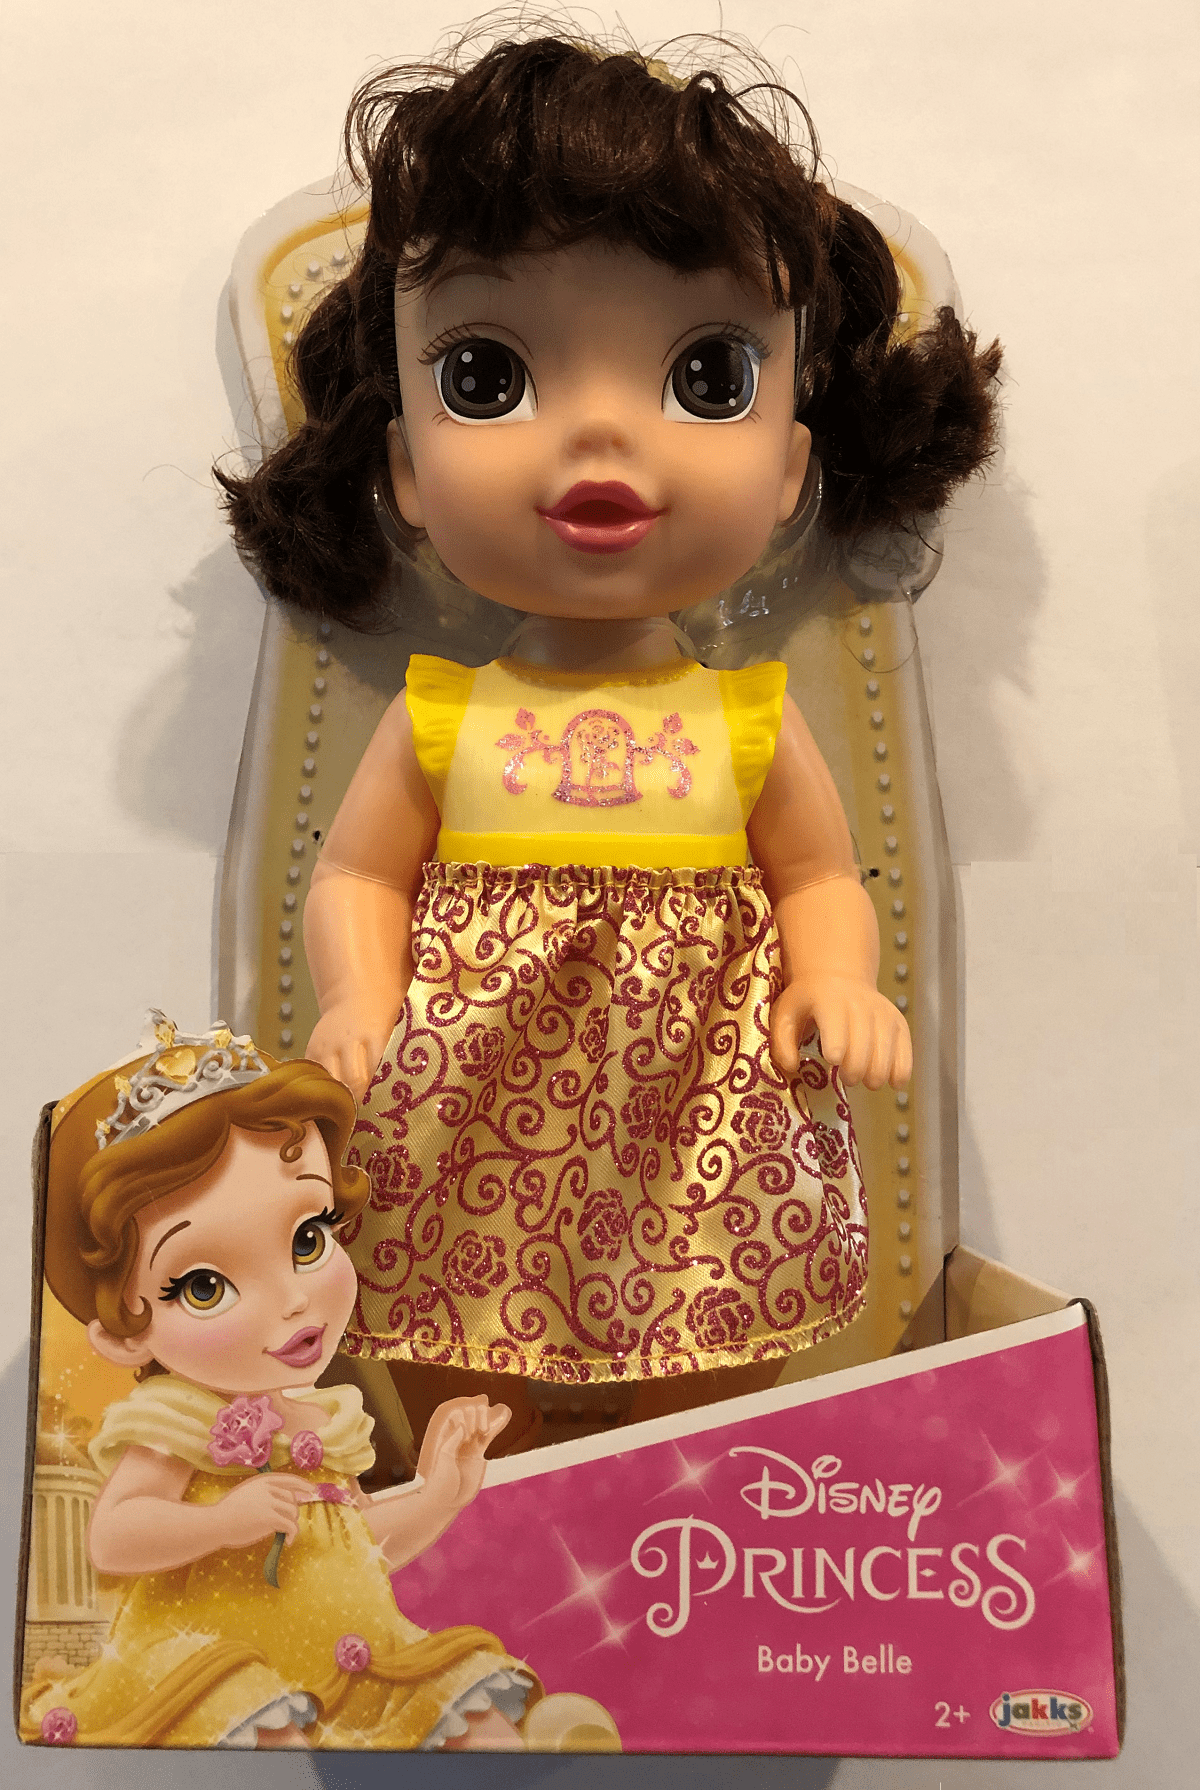 Disney Princess Baby Belle Doll - Walmart.com